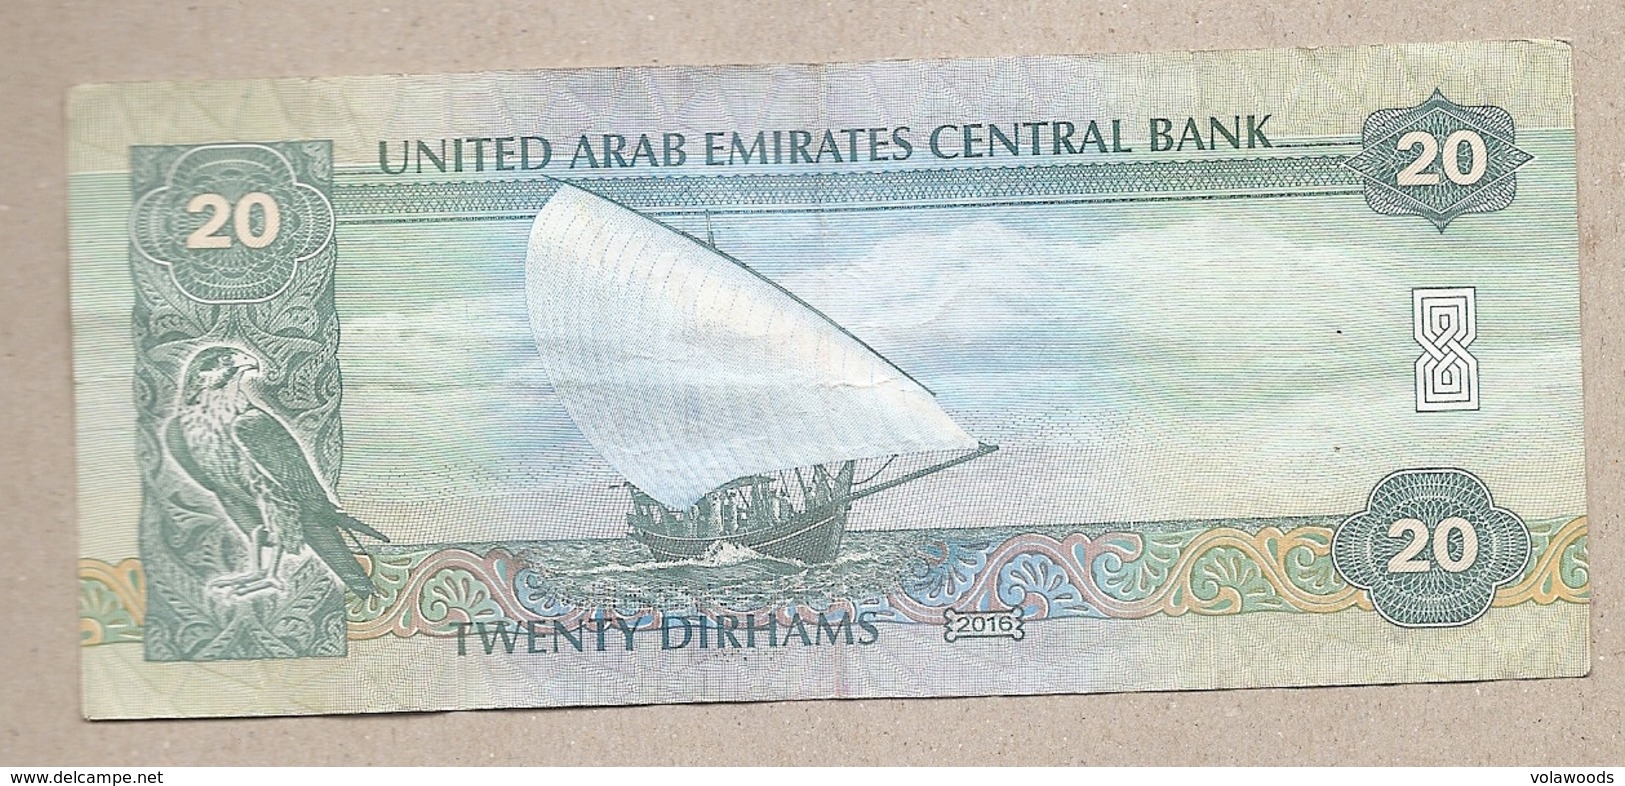 Emirati Arabi Uniti - Banconota Circolata Da 20 Dirhams P-28d - 2016 - United Arab Emirates